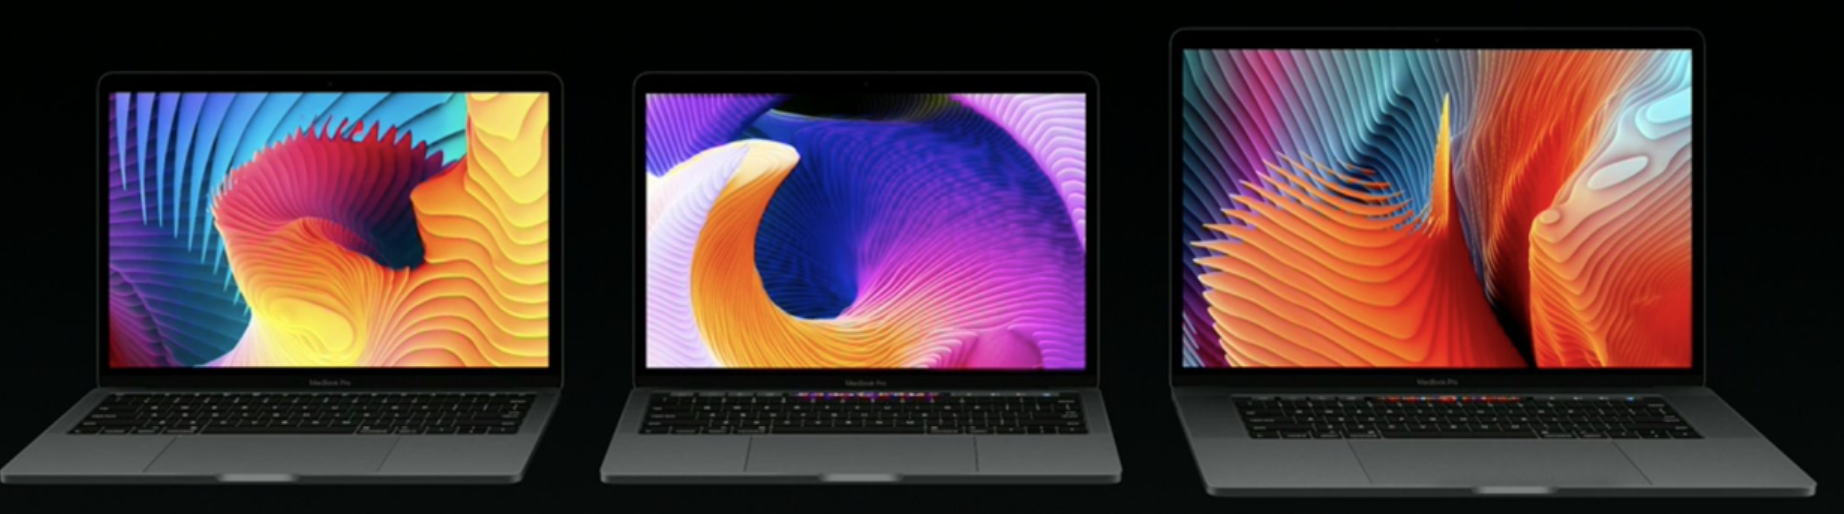 macbook pro fondo de pantalla,ordenador portátil,pantalla,dispositivo de salida,tecnología,dispositivo de demostracion